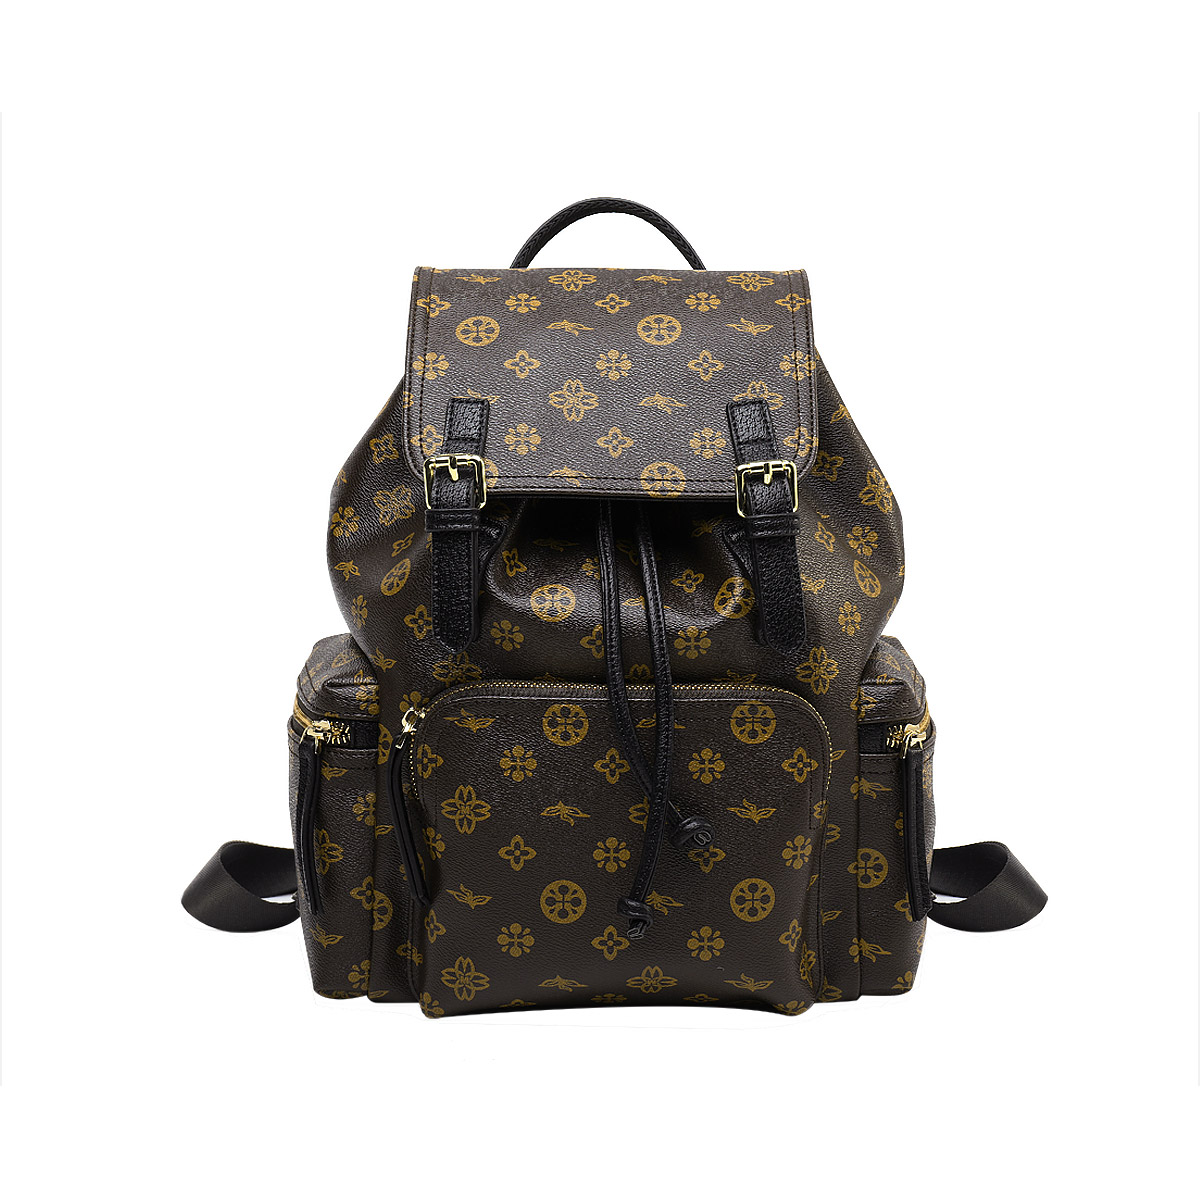 125bag:Traveling Female Backpacks Retro Fashion Handbags Large Capacity Anti-woman Bags